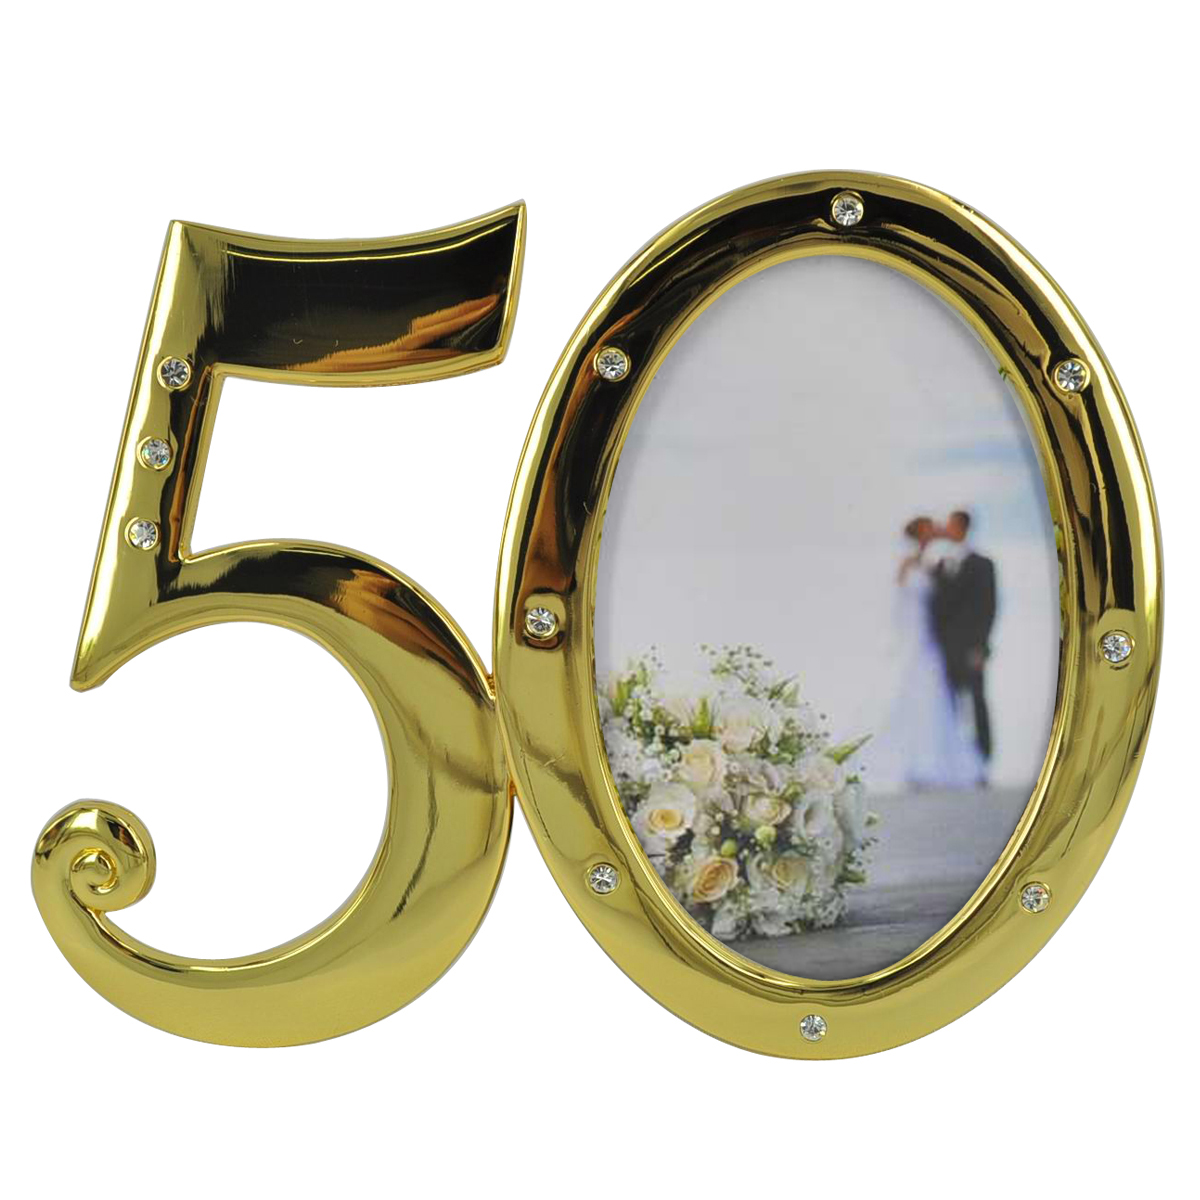 "50" memory photo frame